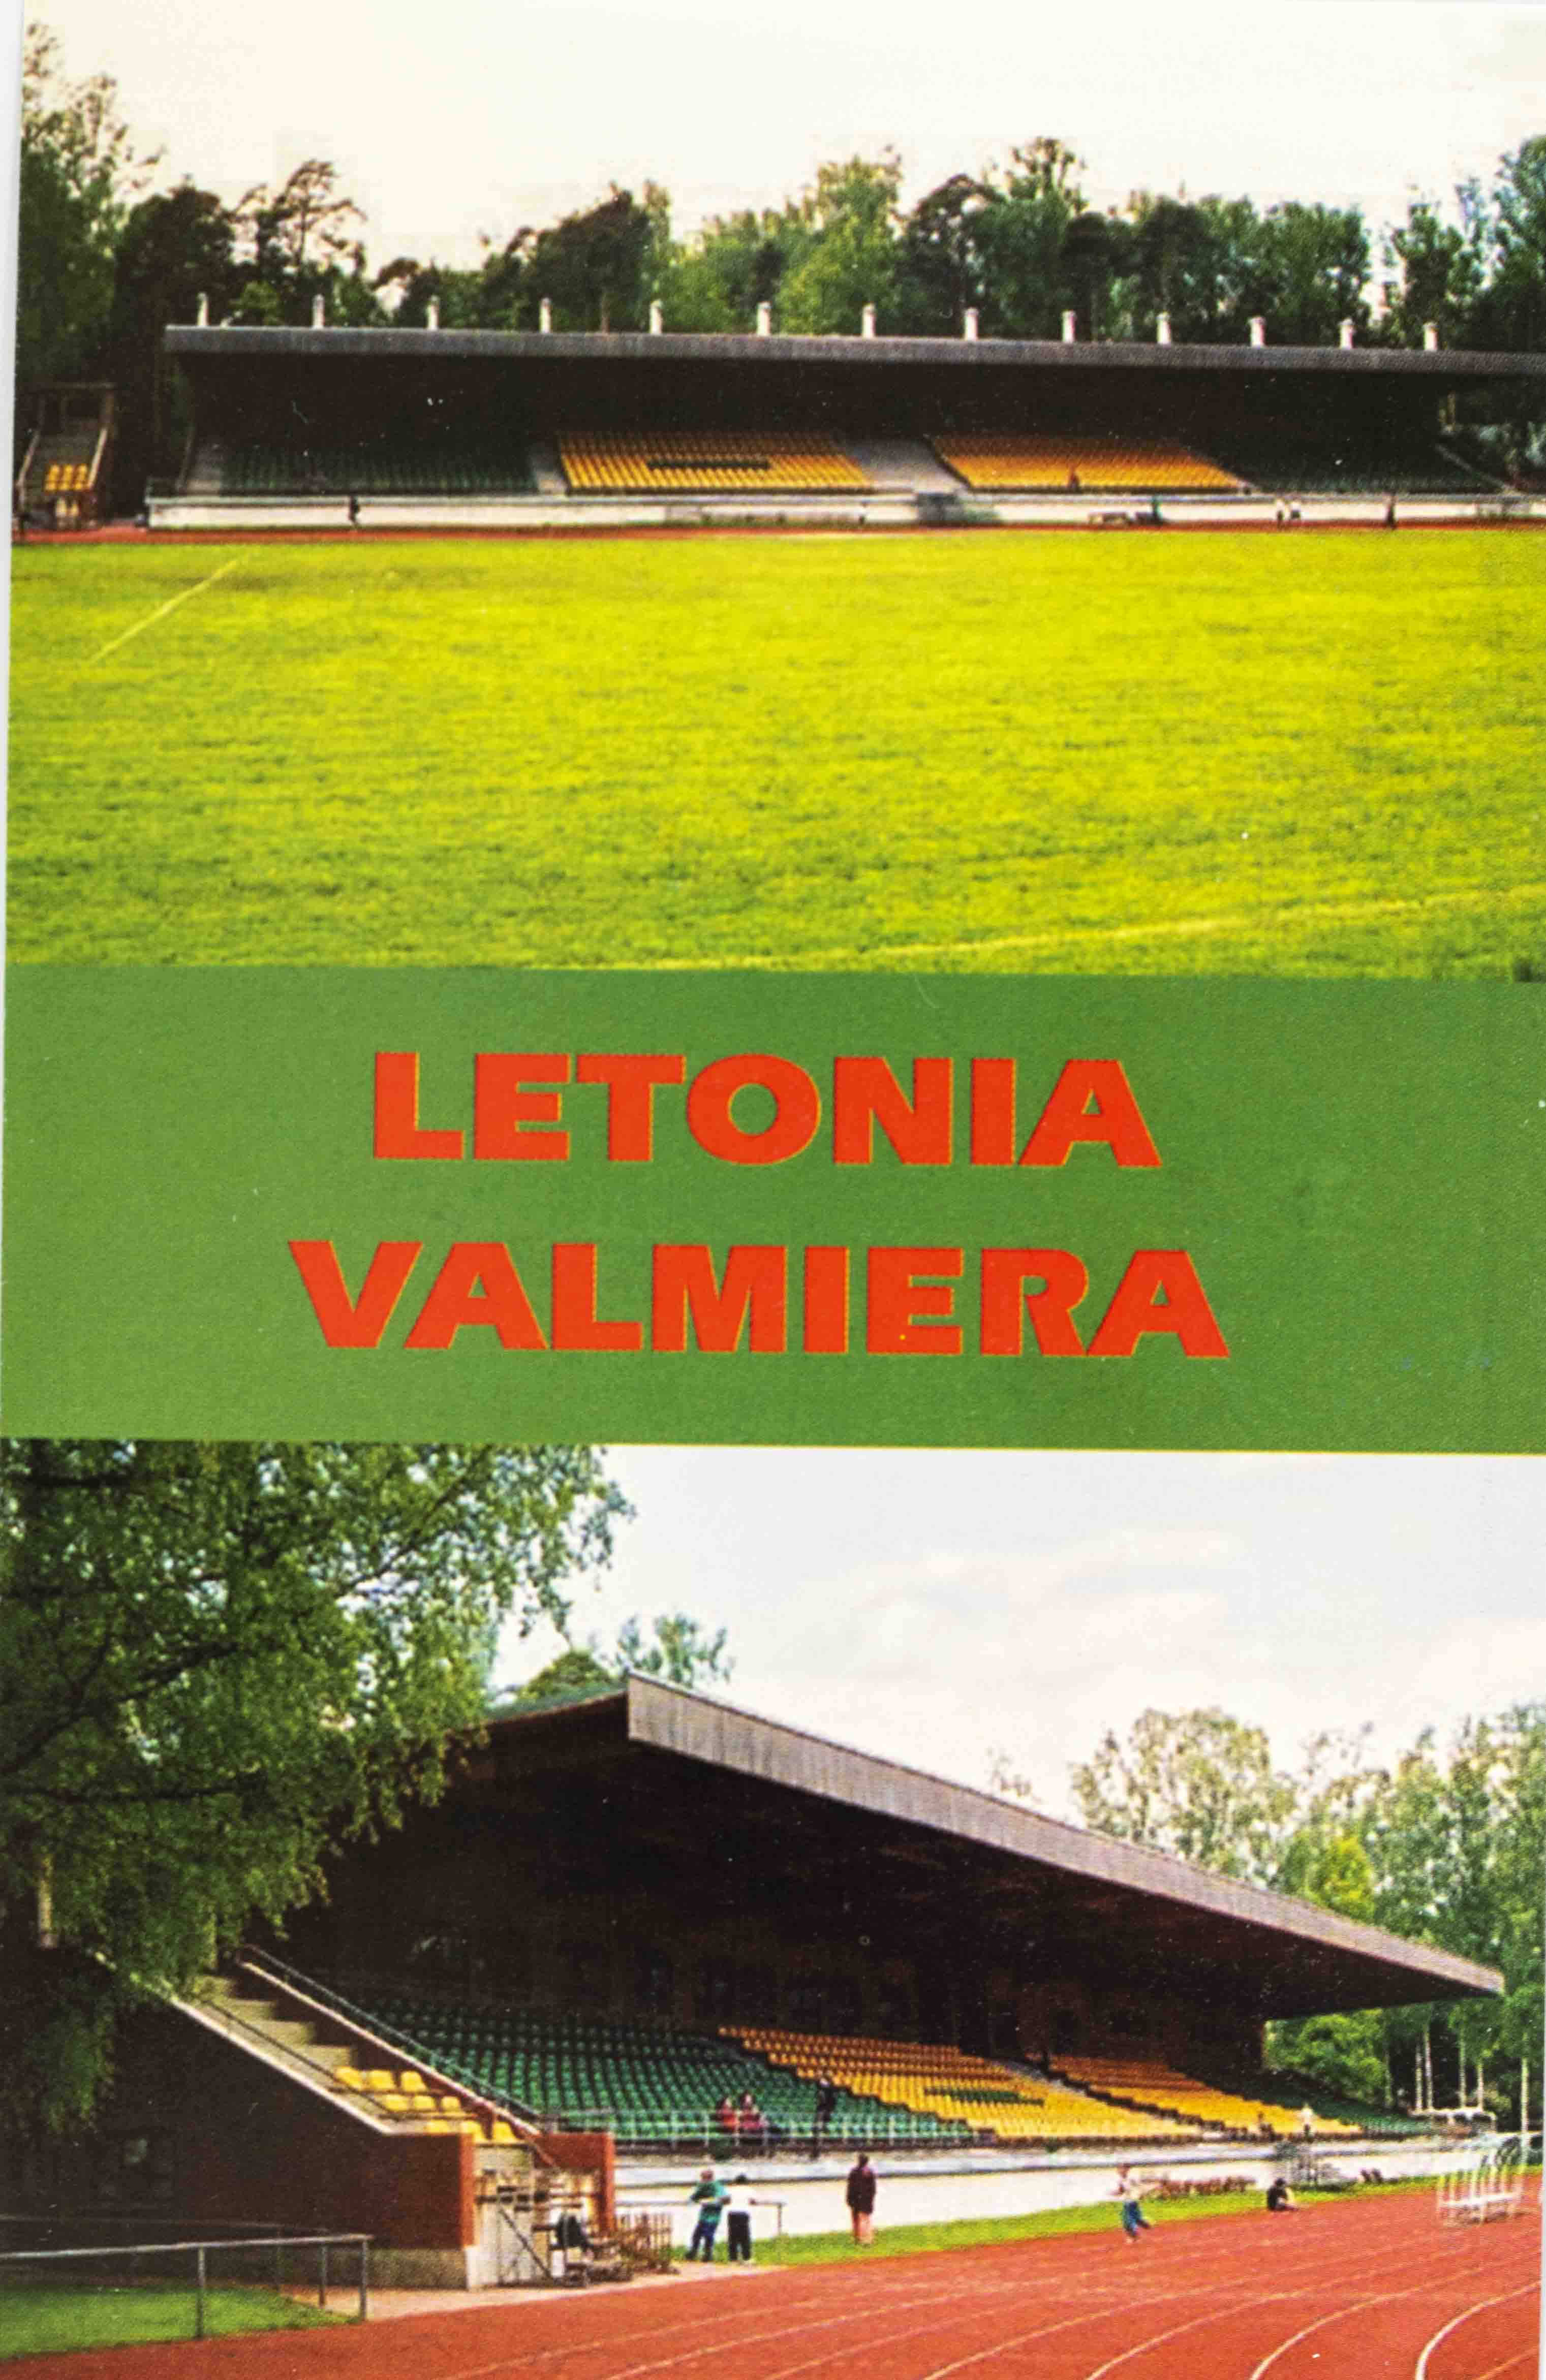 Pohlednice Stadion, Letonia Valmiera